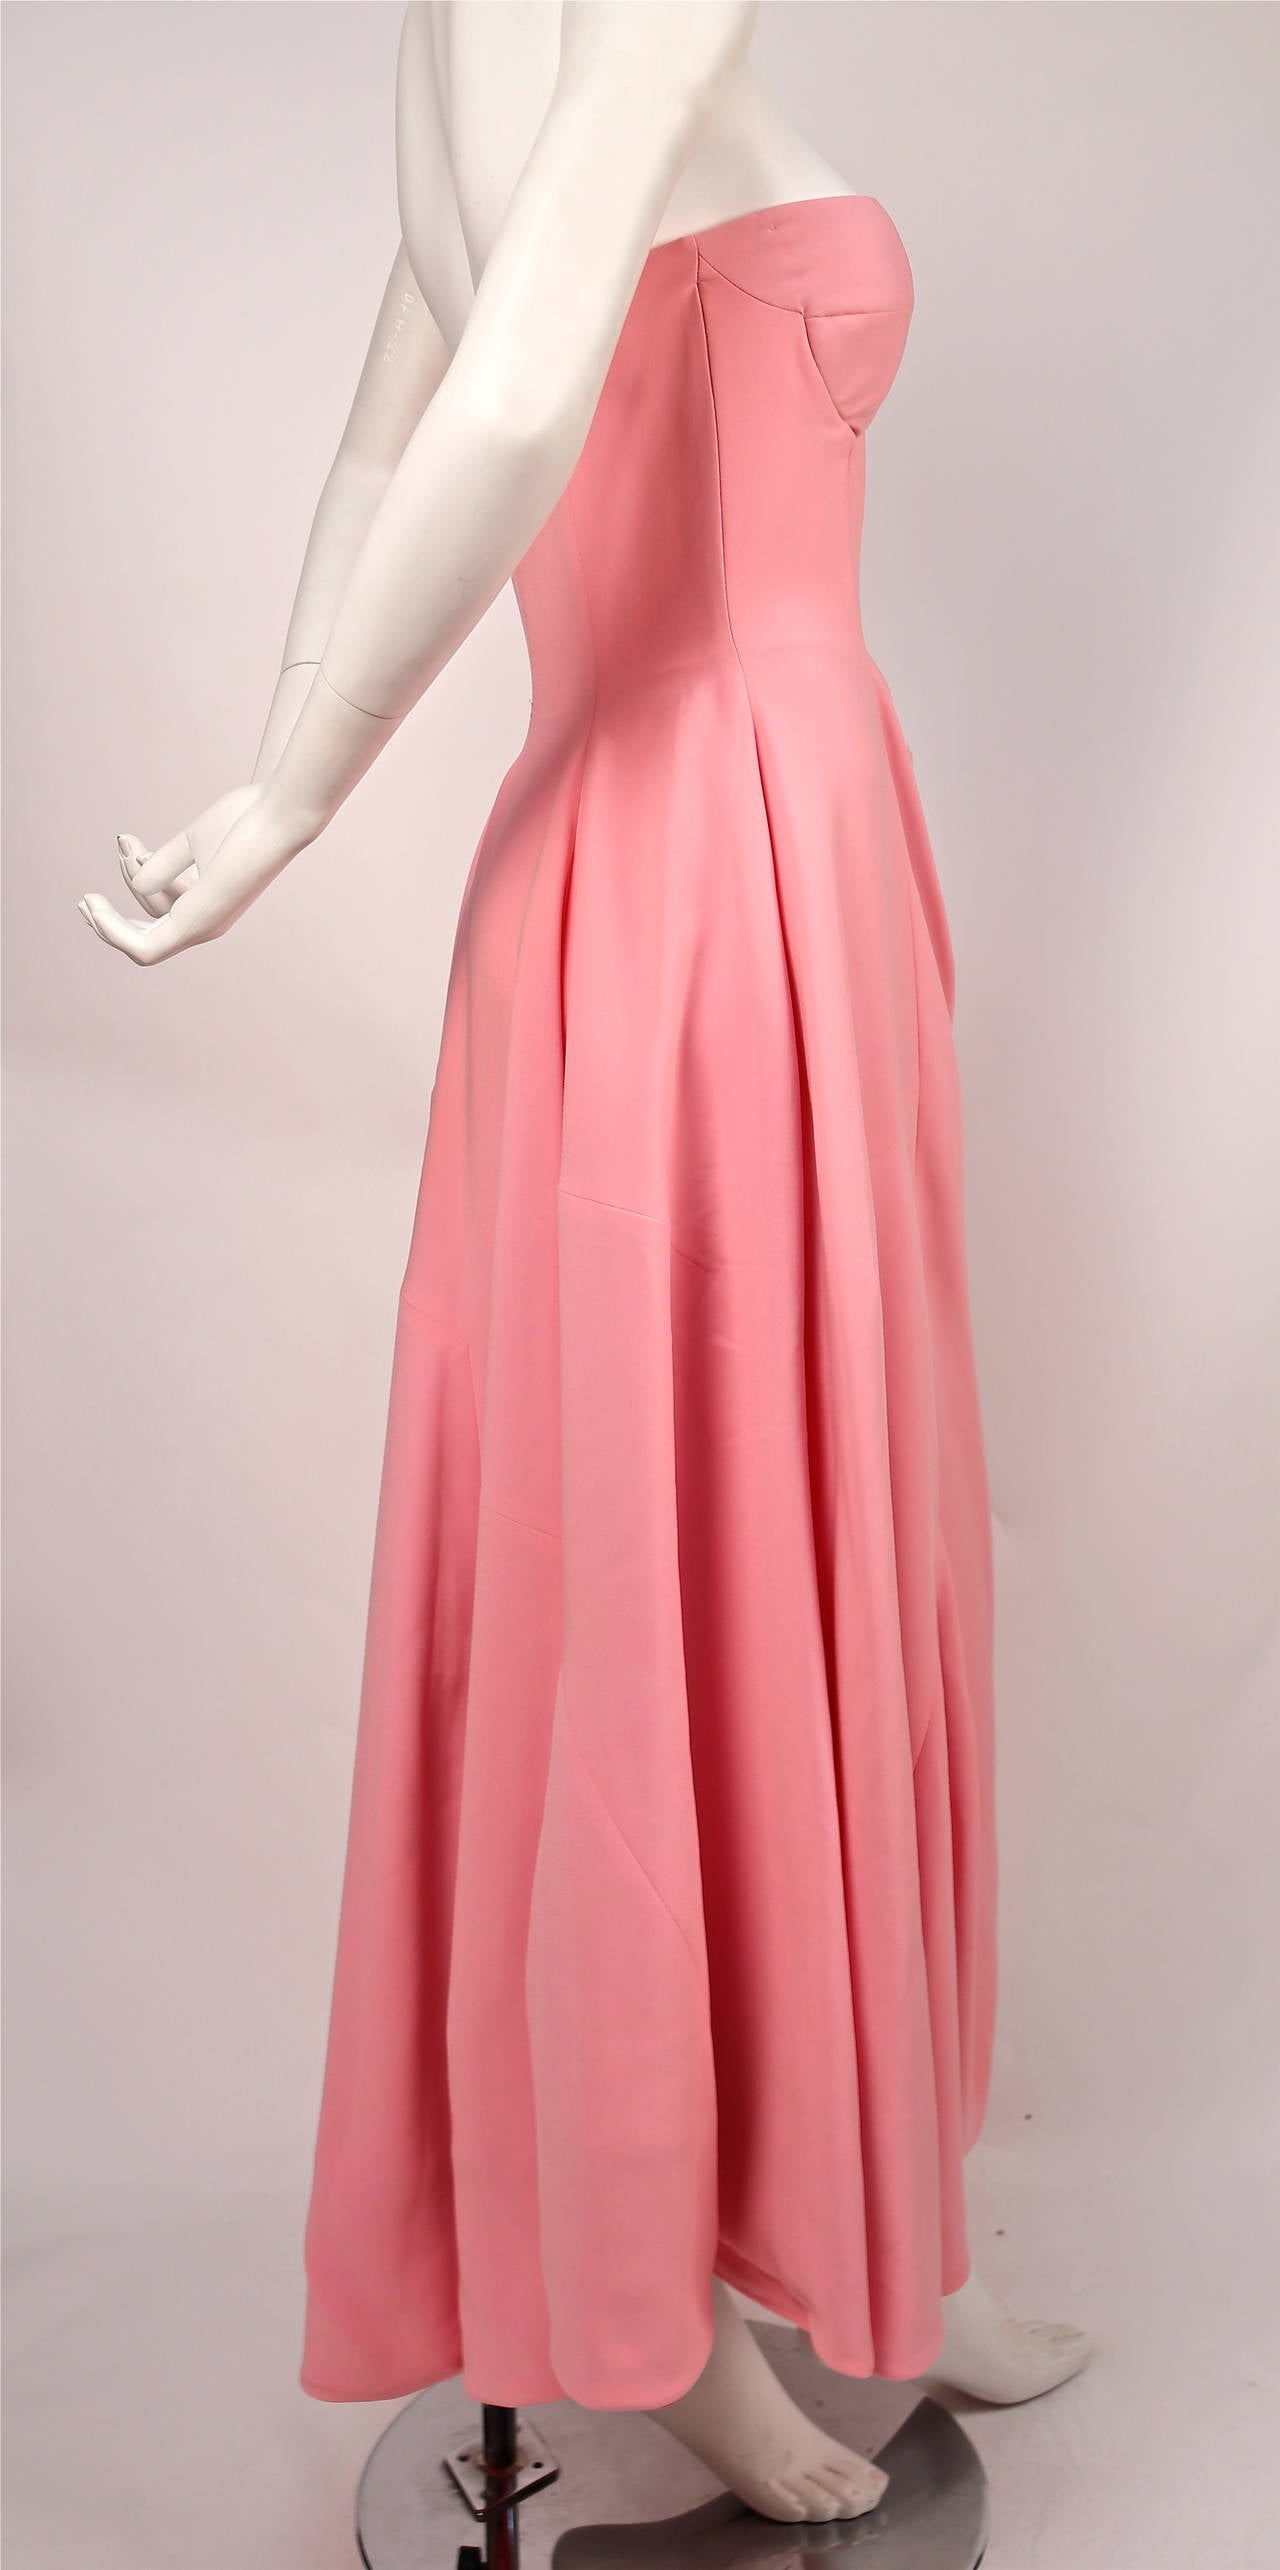 jil sander pink dress